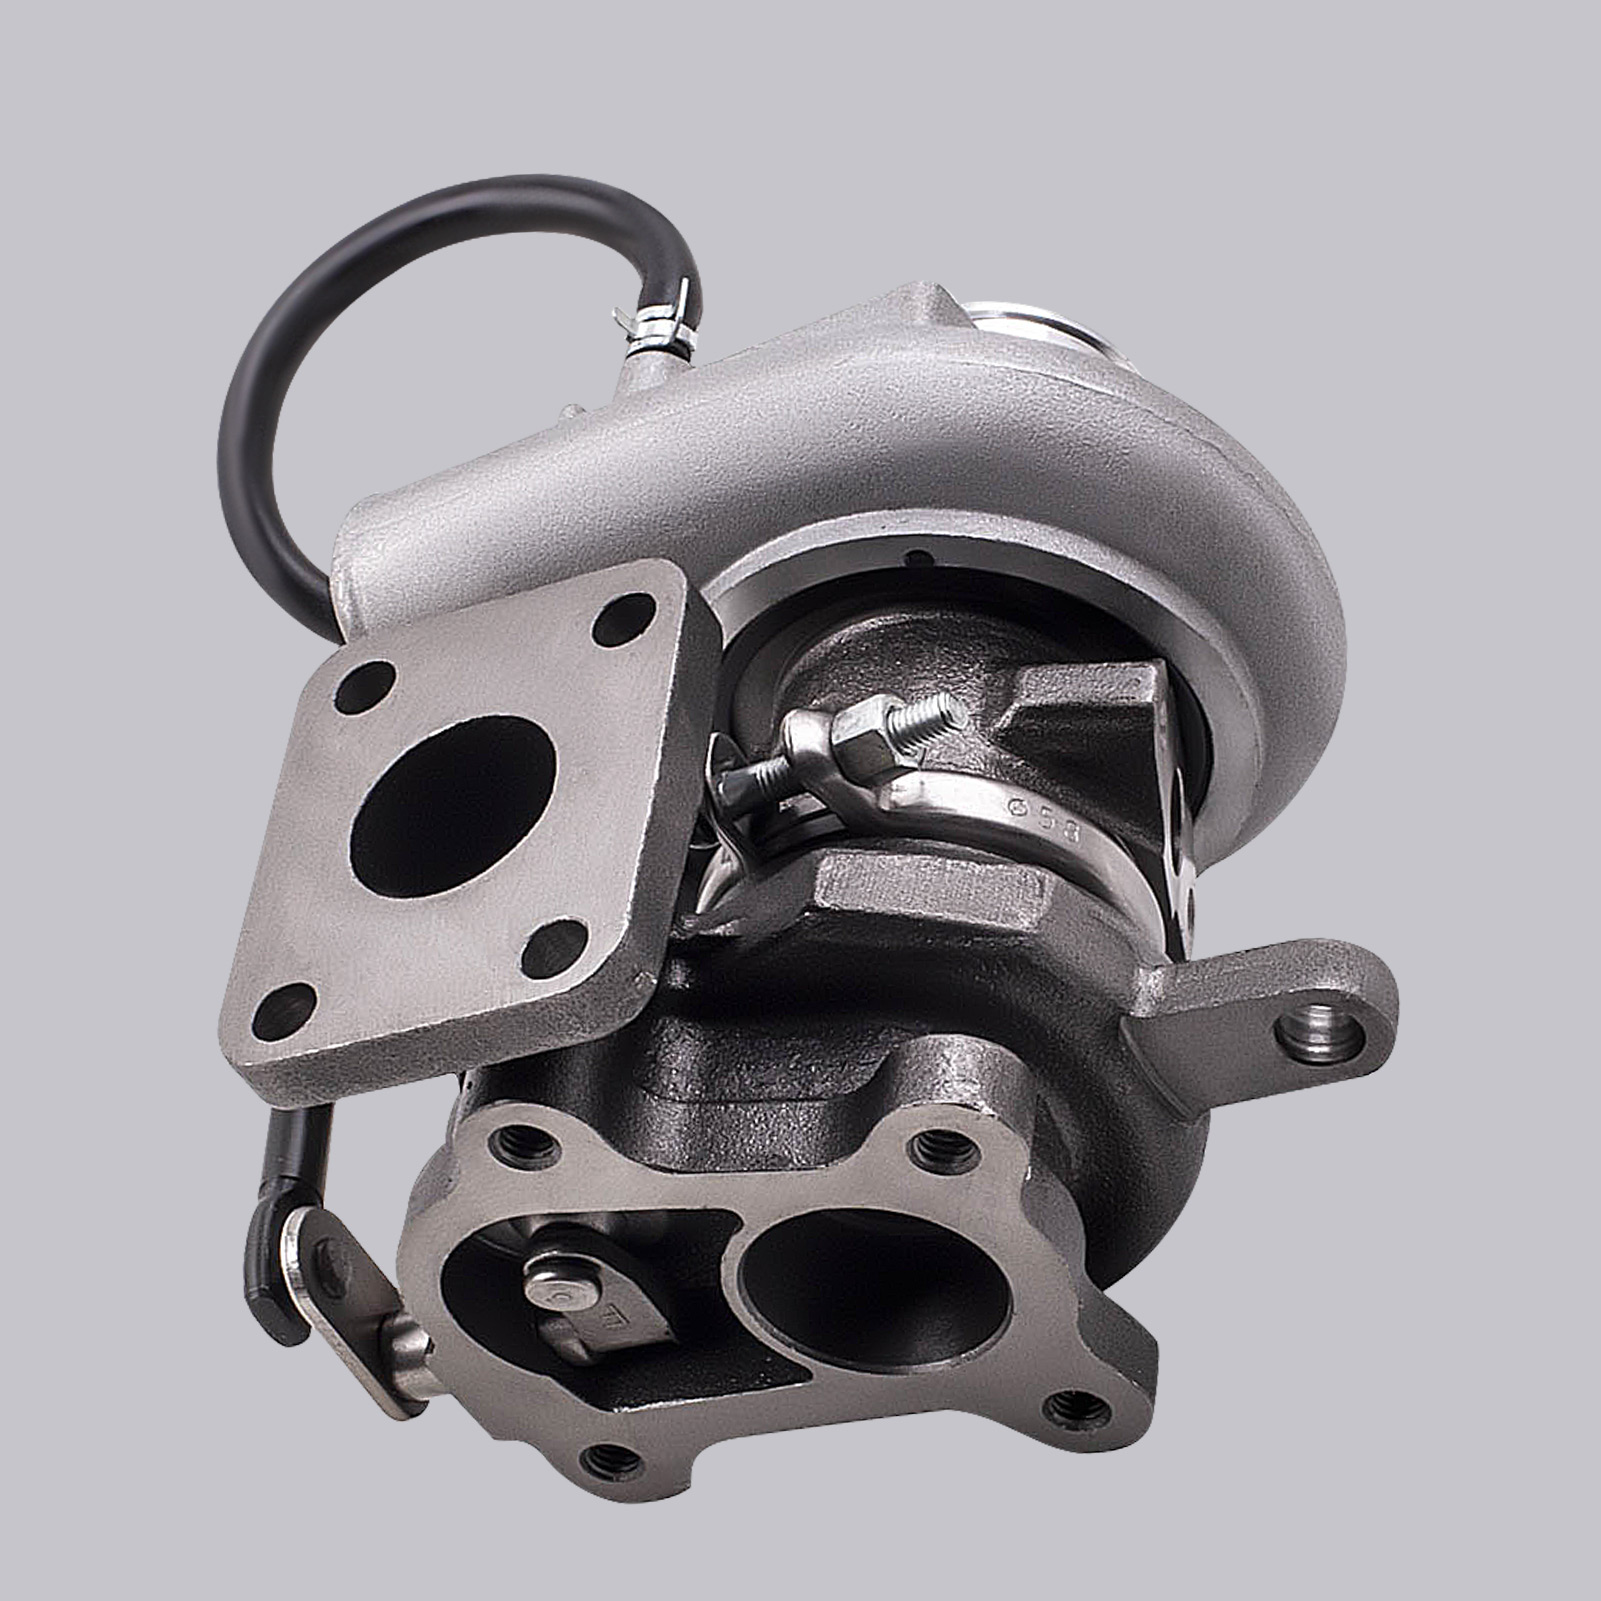 Turbolader for Hyundai Santa Fe 2.0 Crdi 113 Cv 28231-27000 2823127000 new